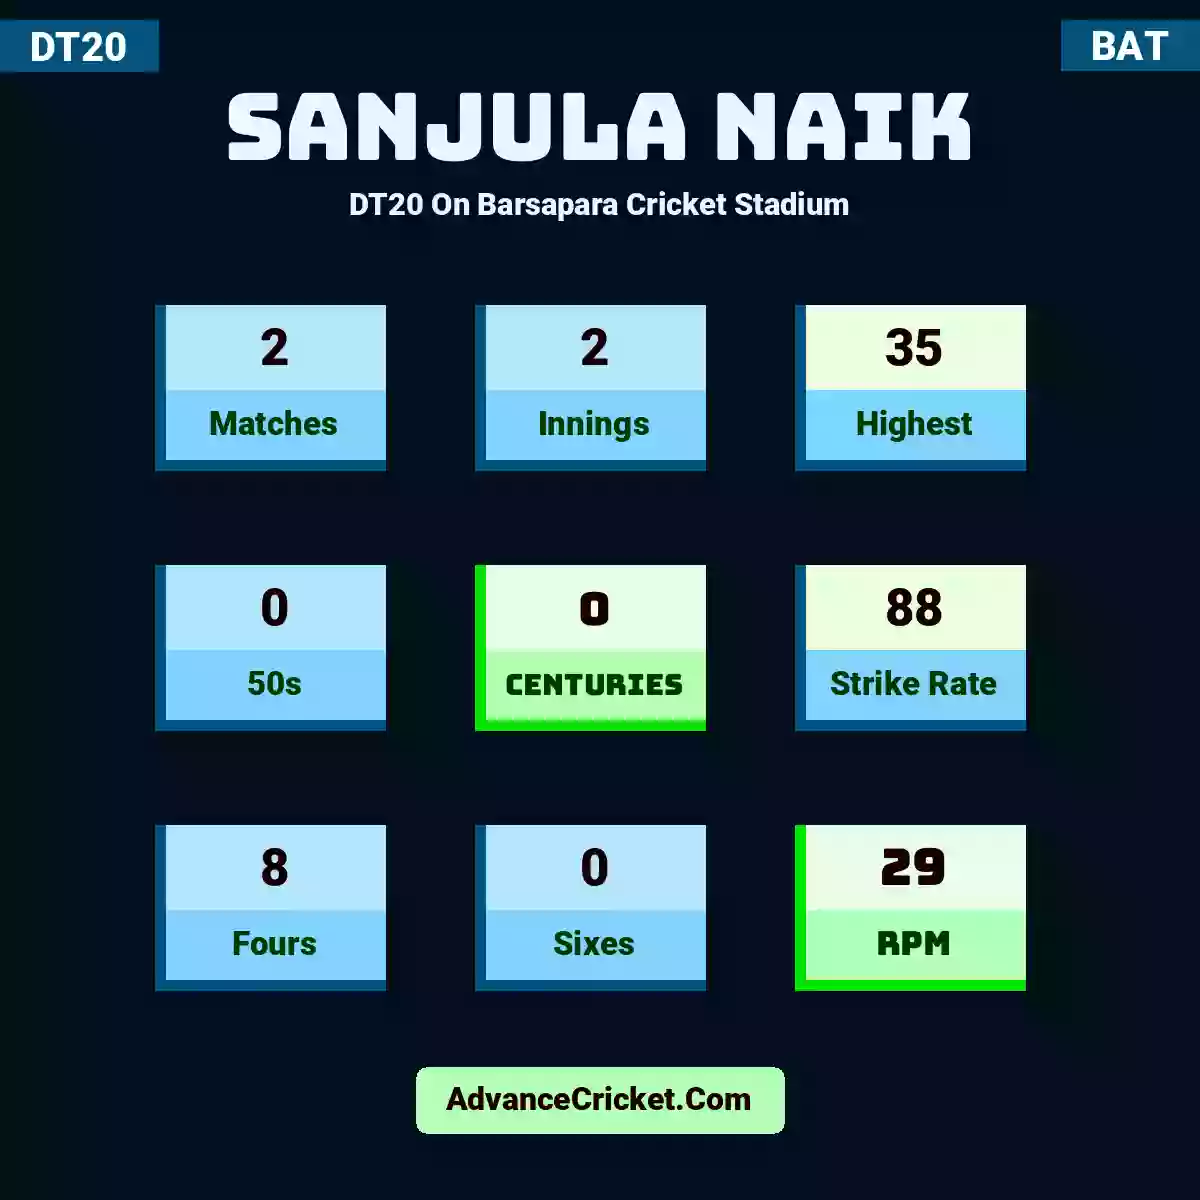 Sanjula Naik DT20  On Barsapara Cricket Stadium, Sanjula Naik played 2 matches, scored 35 runs as highest, 0 half-centuries, and 0 centuries, with a strike rate of 88. S.Naik hit 8 fours and 0 sixes, with an RPM of 29.